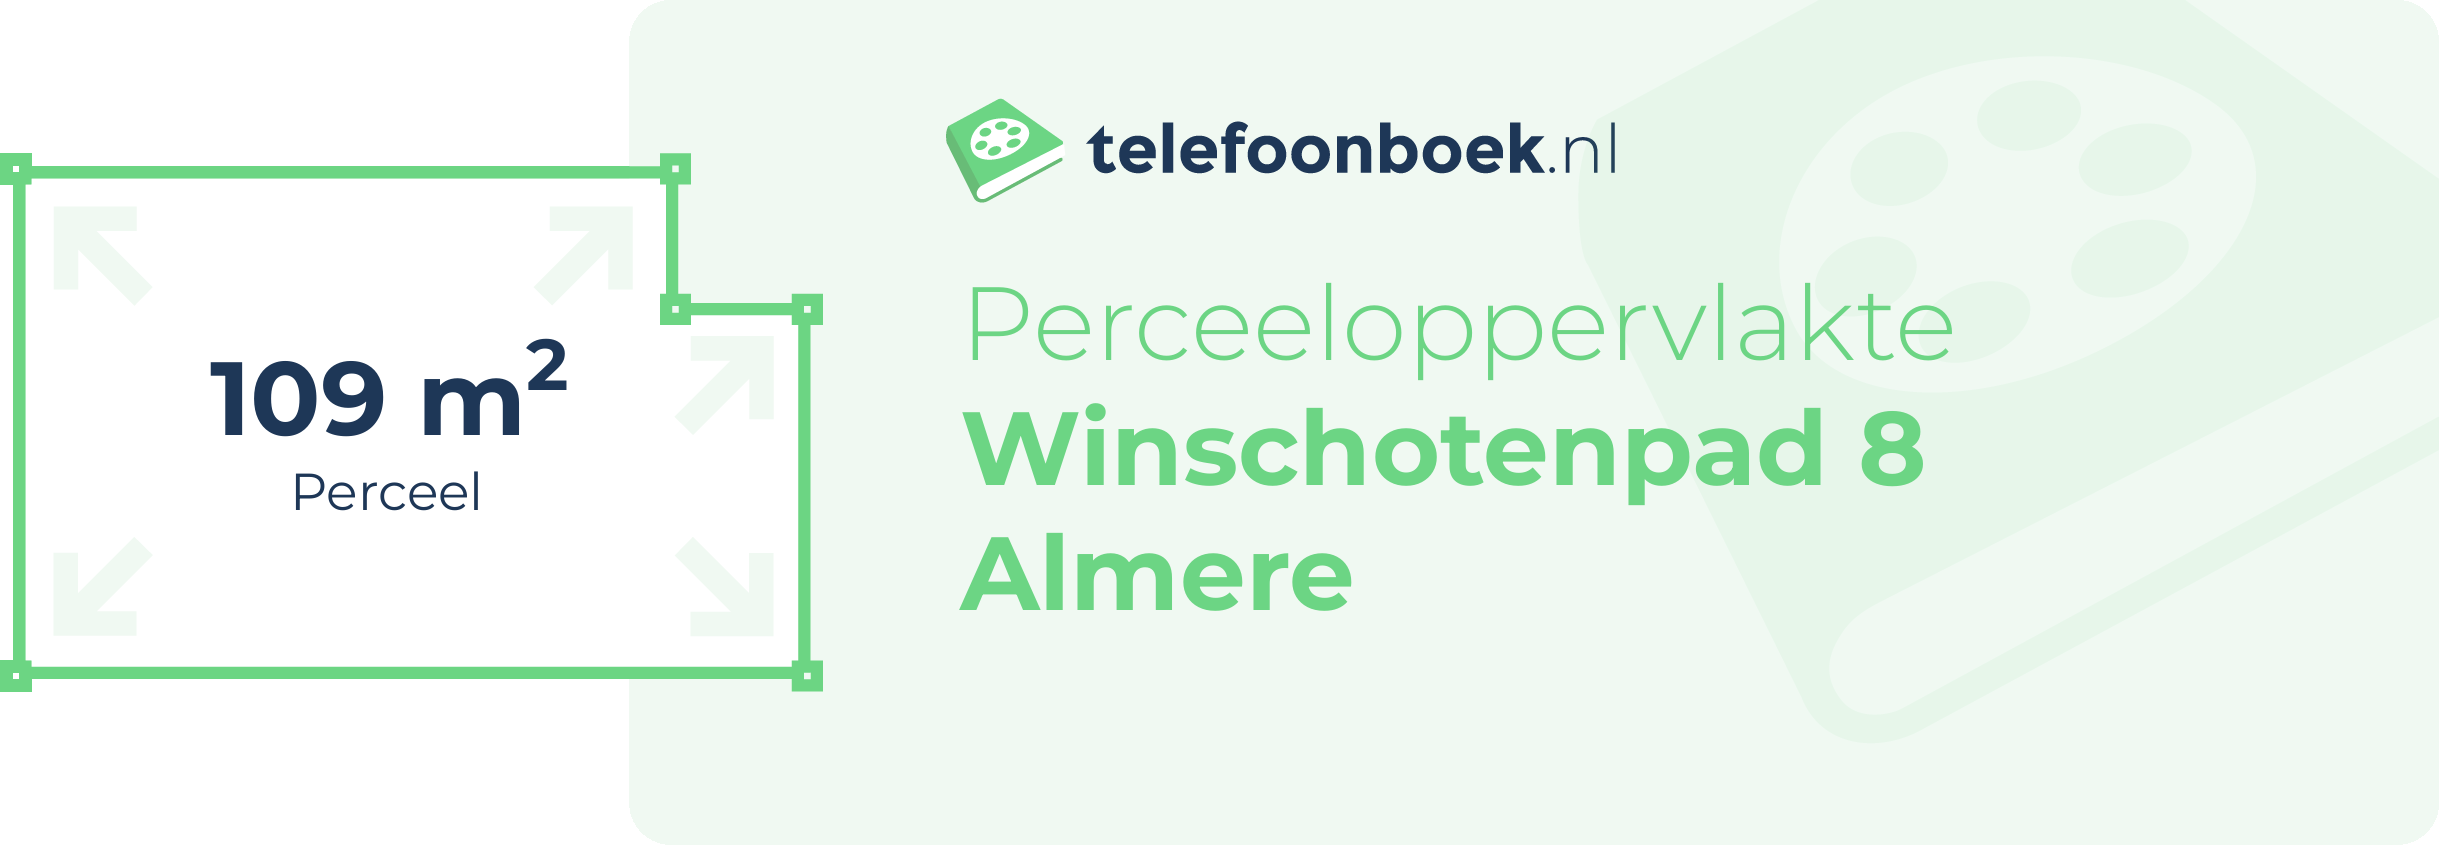 Perceeloppervlakte Winschotenpad 8 Almere